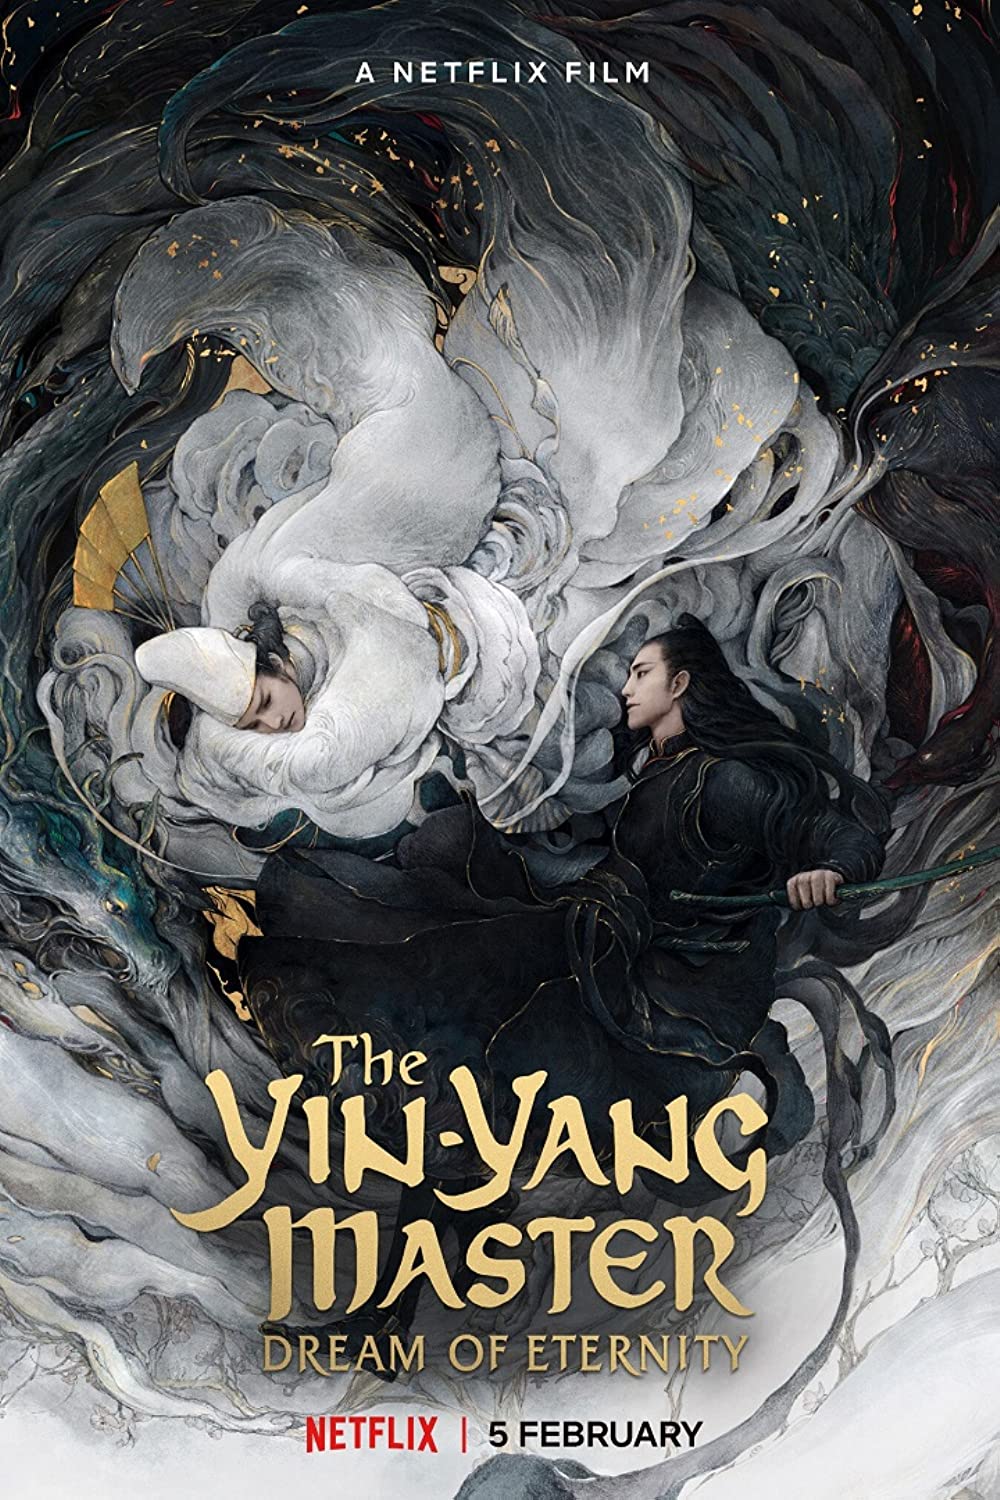 Filmbeschreibung zu The Yin-Yang Master: Dream of Eternity